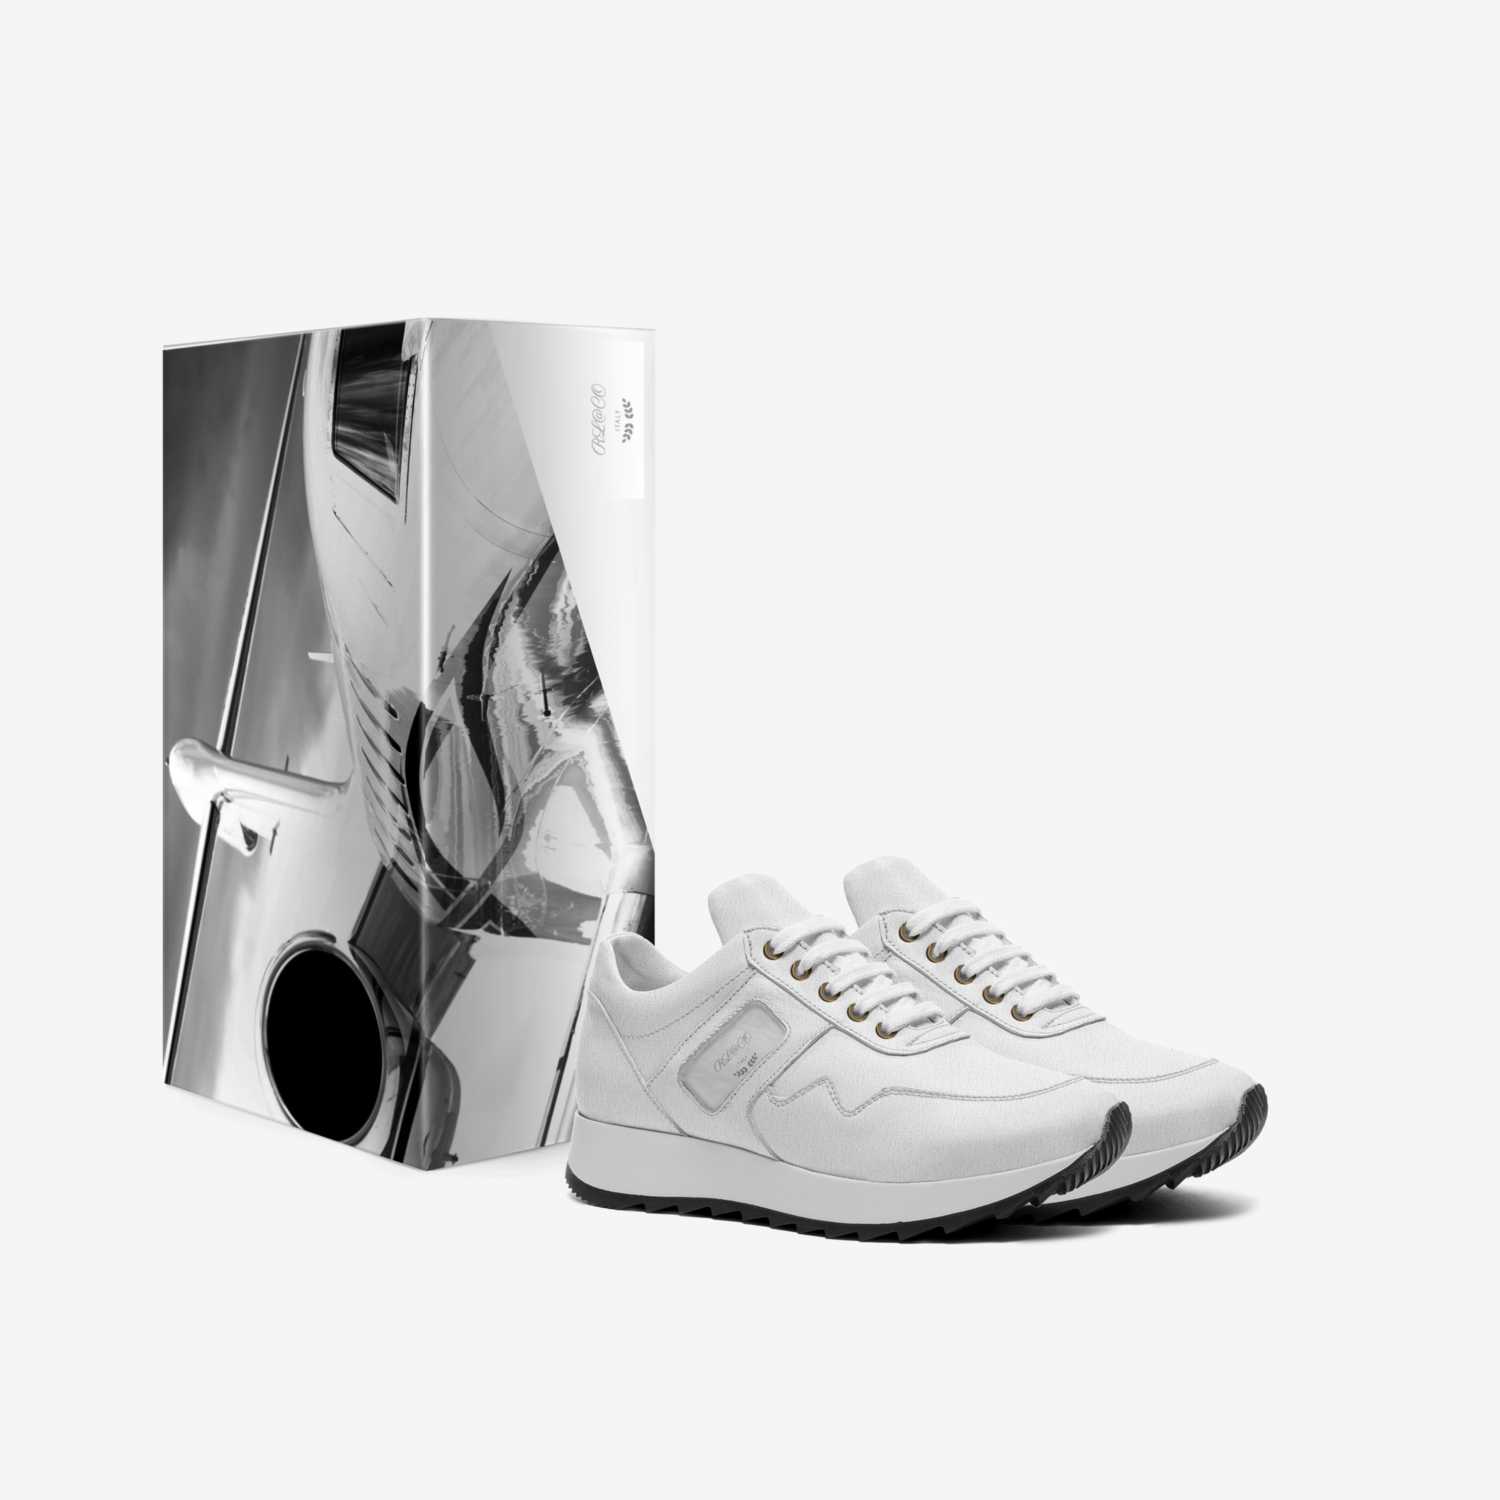 RL@CO custom made in Italy shoes by Rashanda Lyons | Box view